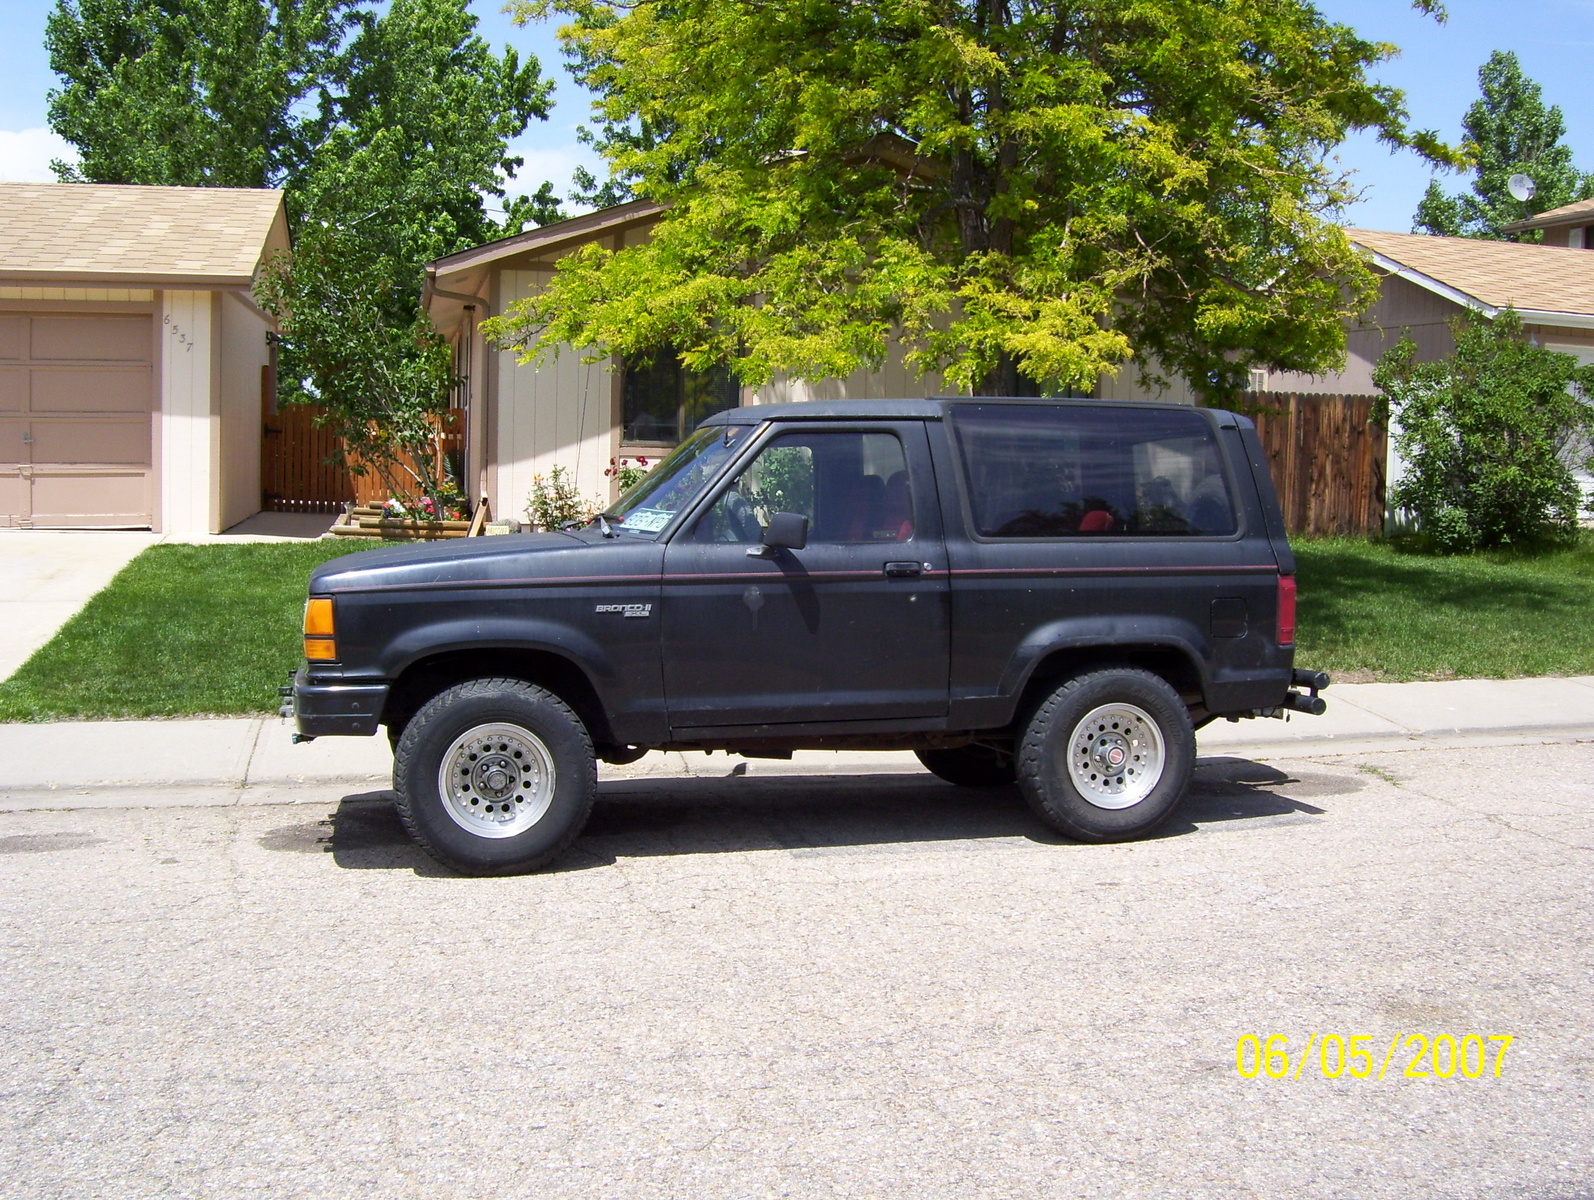 1989 Bronco ford ii specs #3